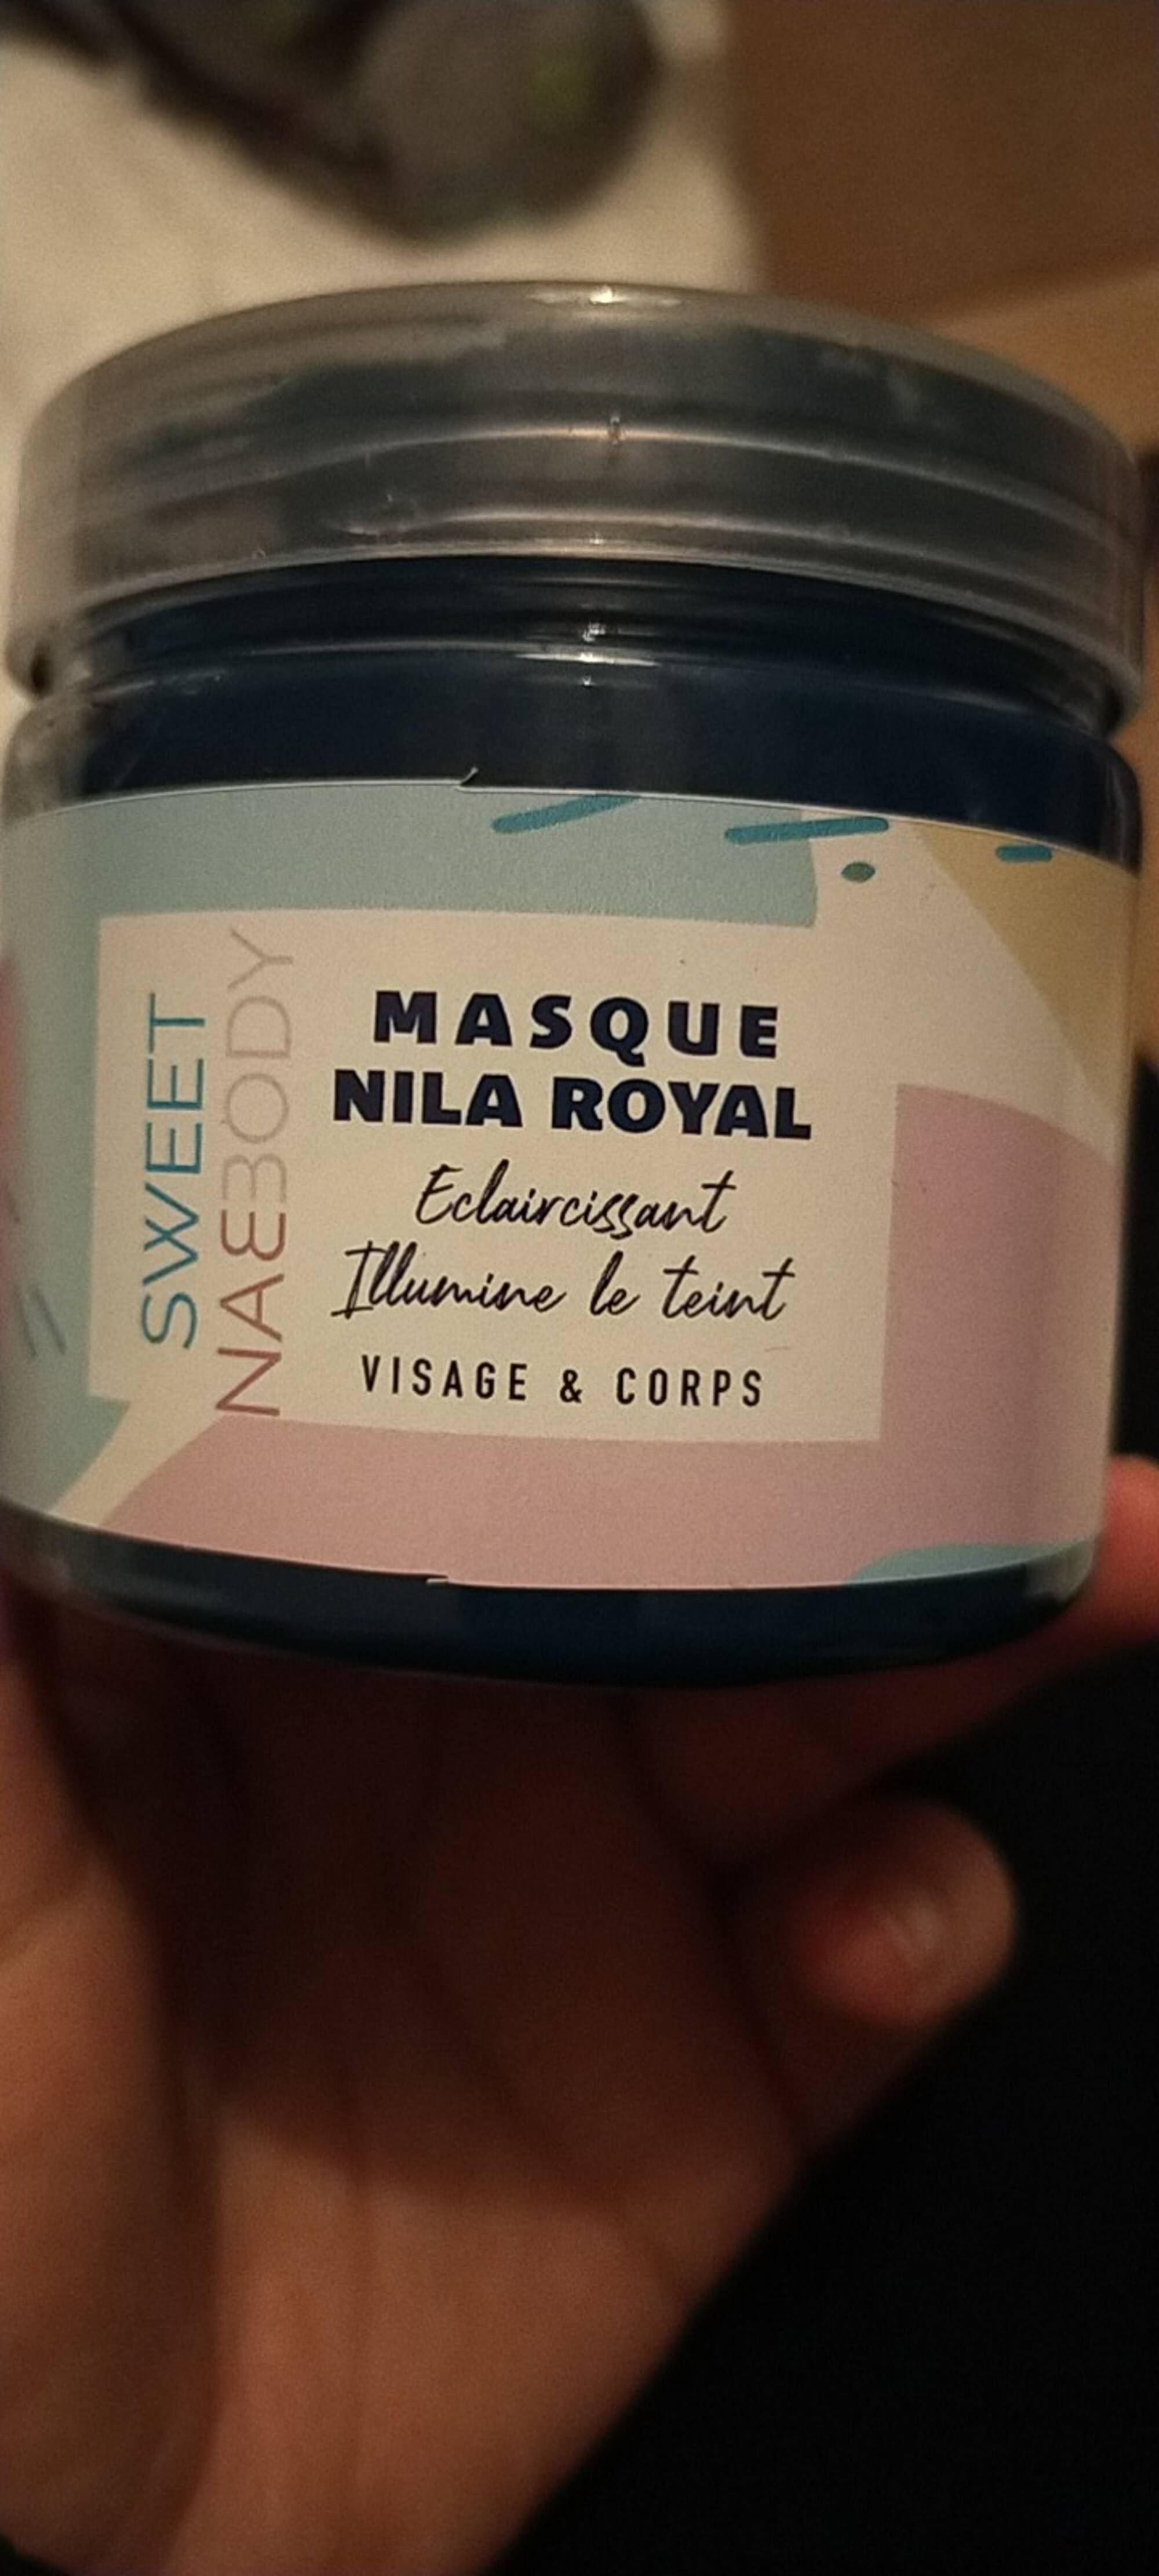 SWEET NAB BODY - Masque nila royal 